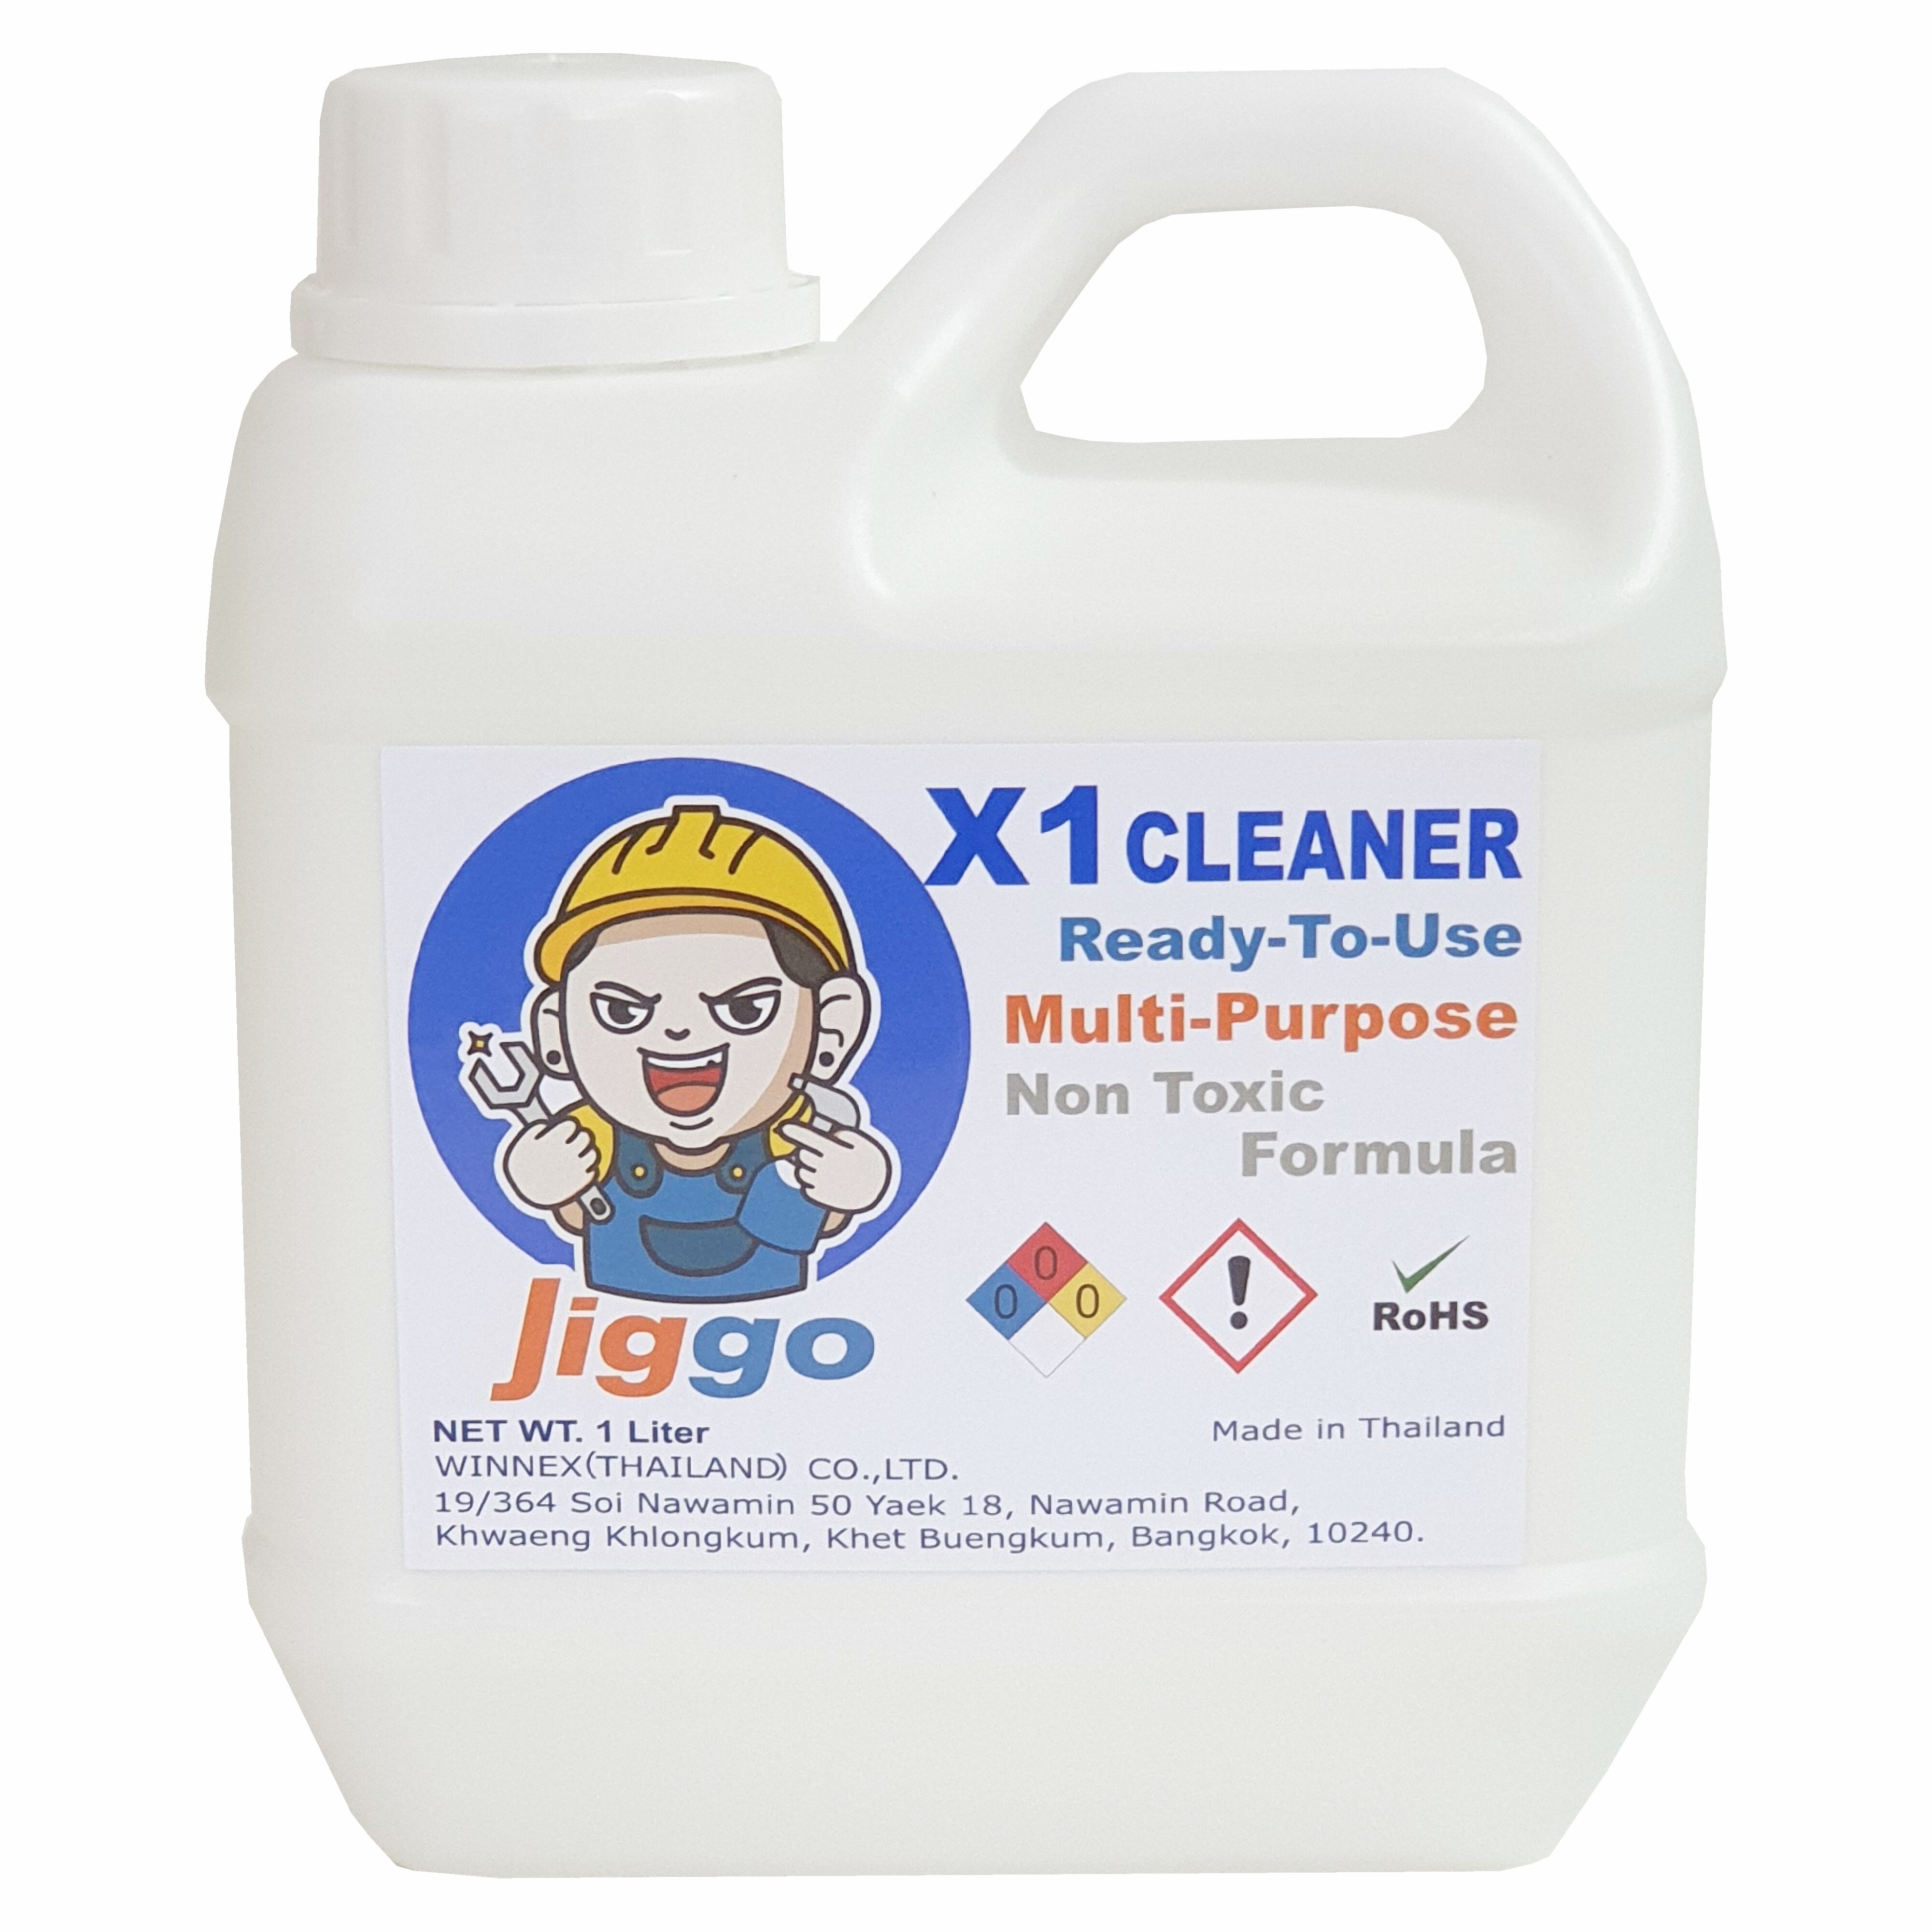 Jiggo X1 Cleaner 1 L น้ำยาล้างน้ำมัน จาระบี เขม่า เครื่องยนต์ เครื่องจักร ชิ้นงาน ท่อไอดี ไม่ขึ้นขี้เกลือ ไม่กัดโอริง ไม่กัดมือ